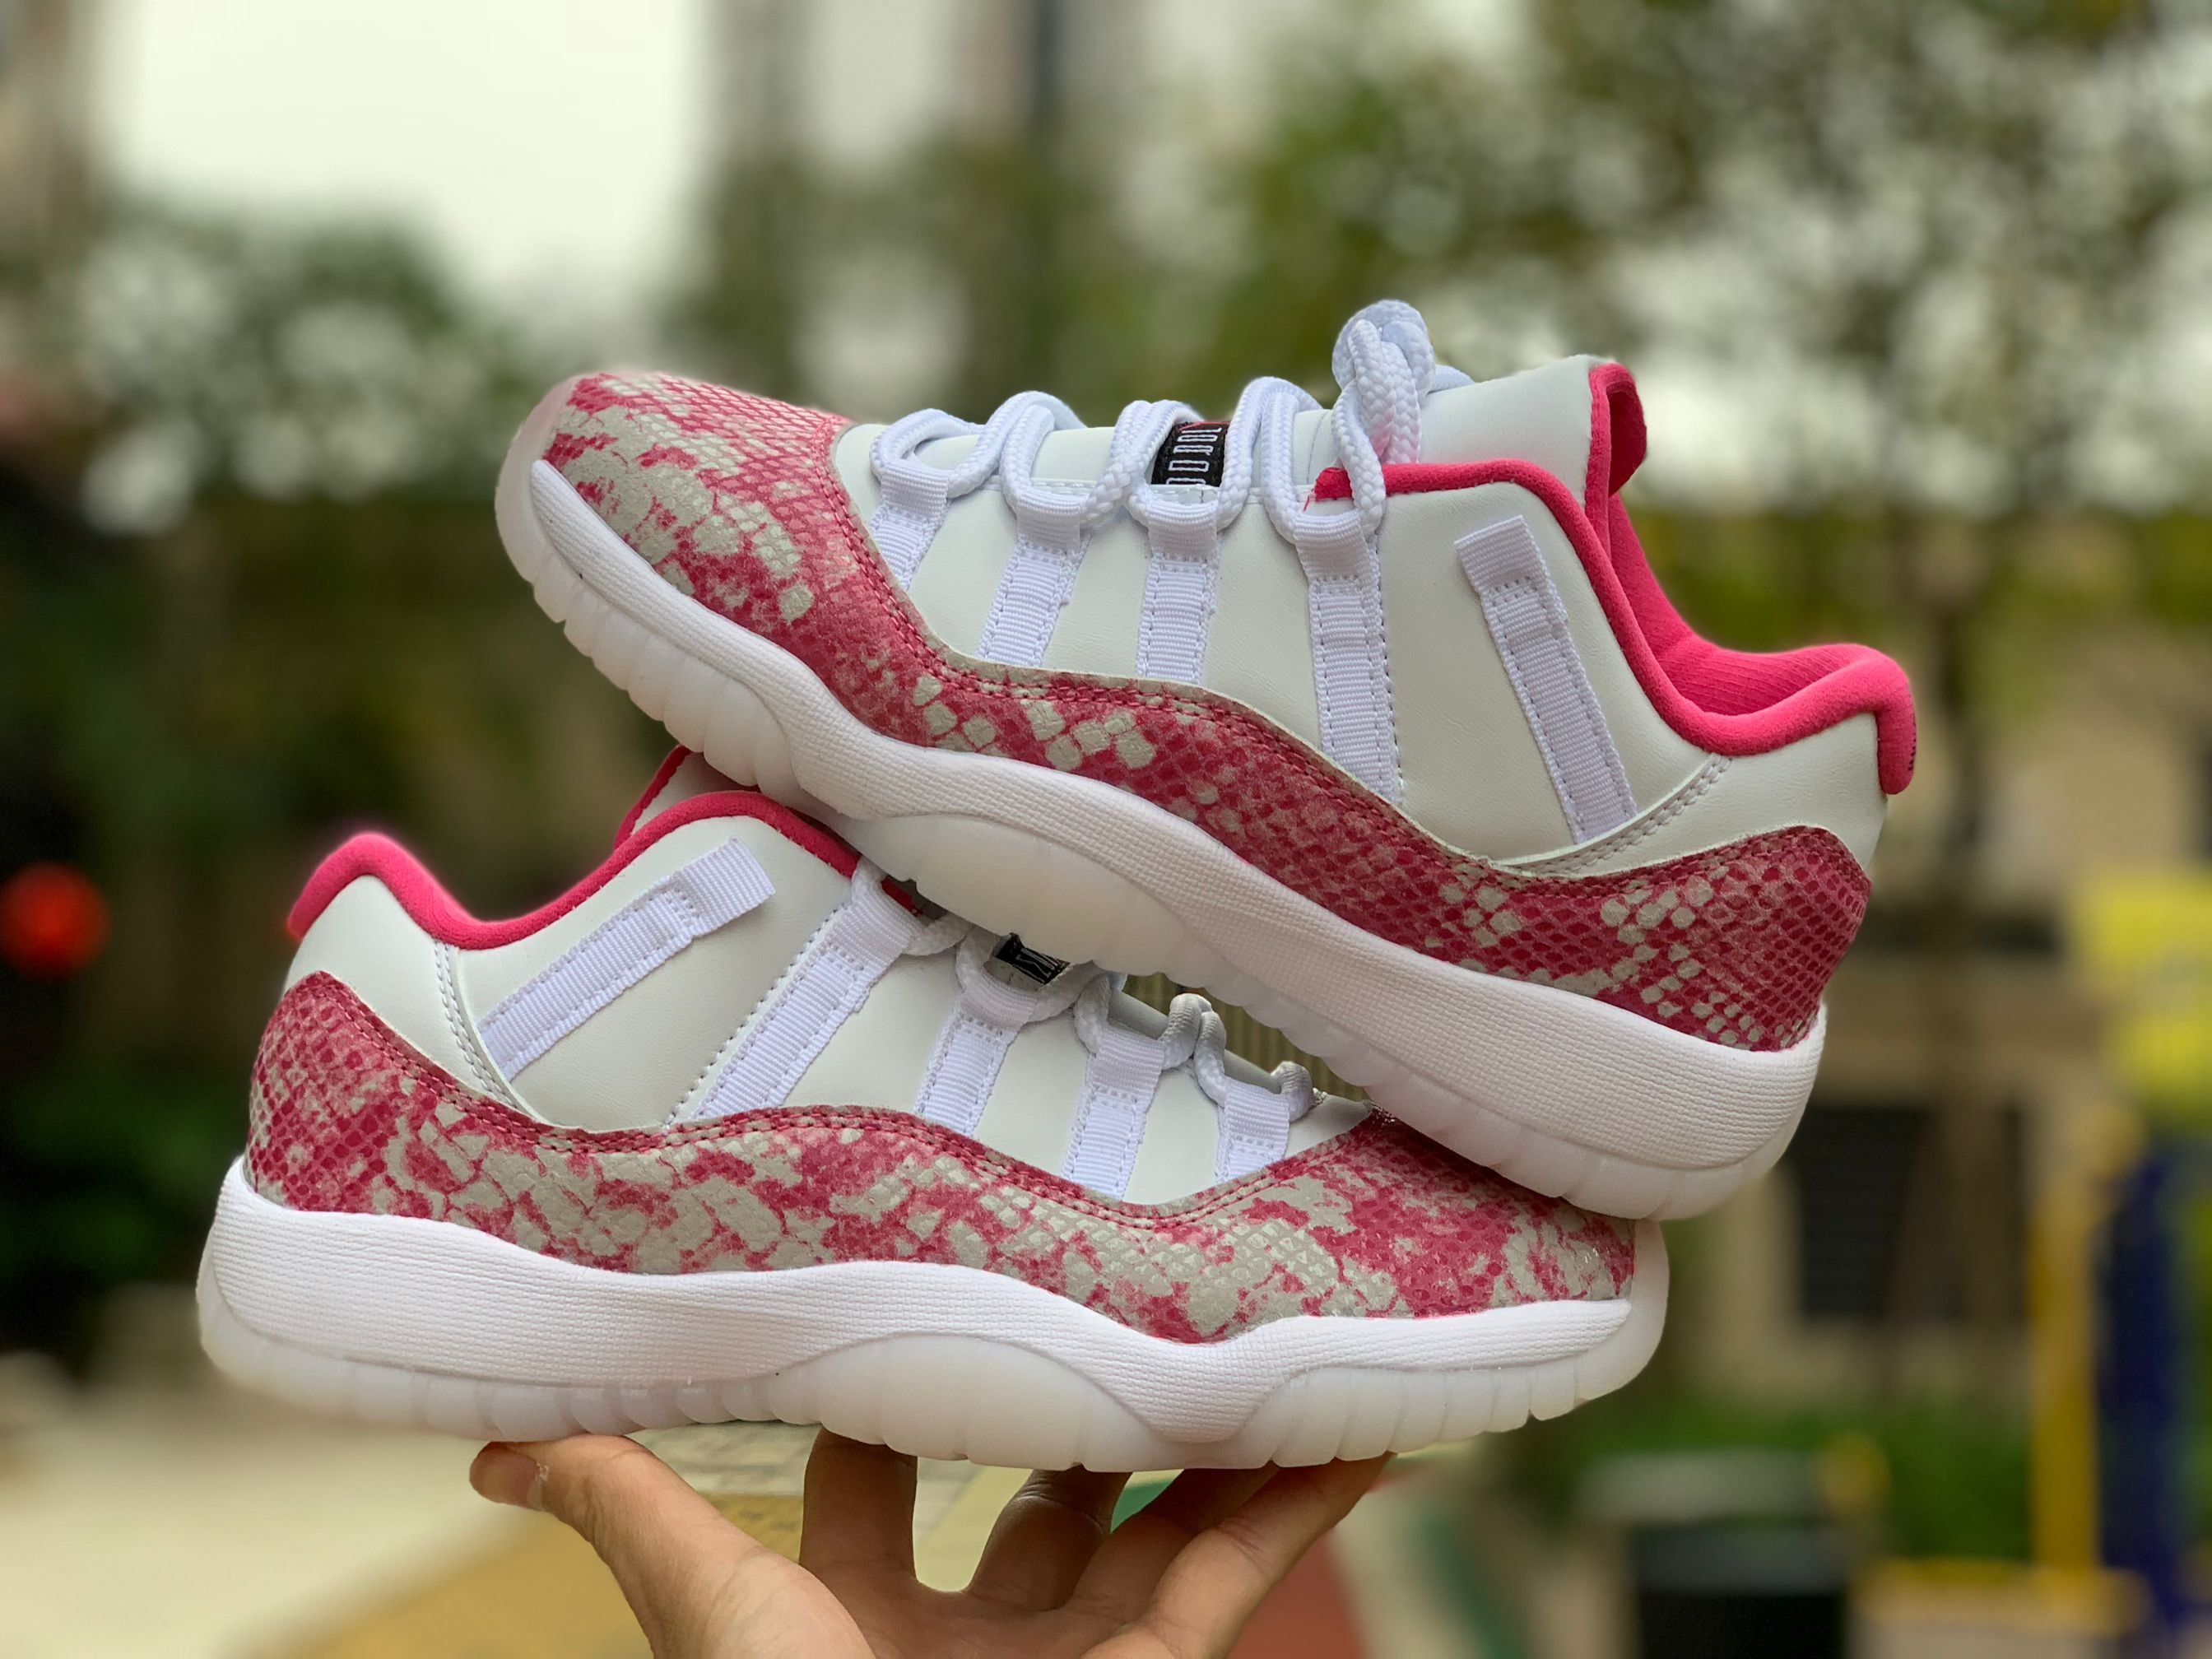 New Air jordan 11 low wmns pink snakeskin girls shoes